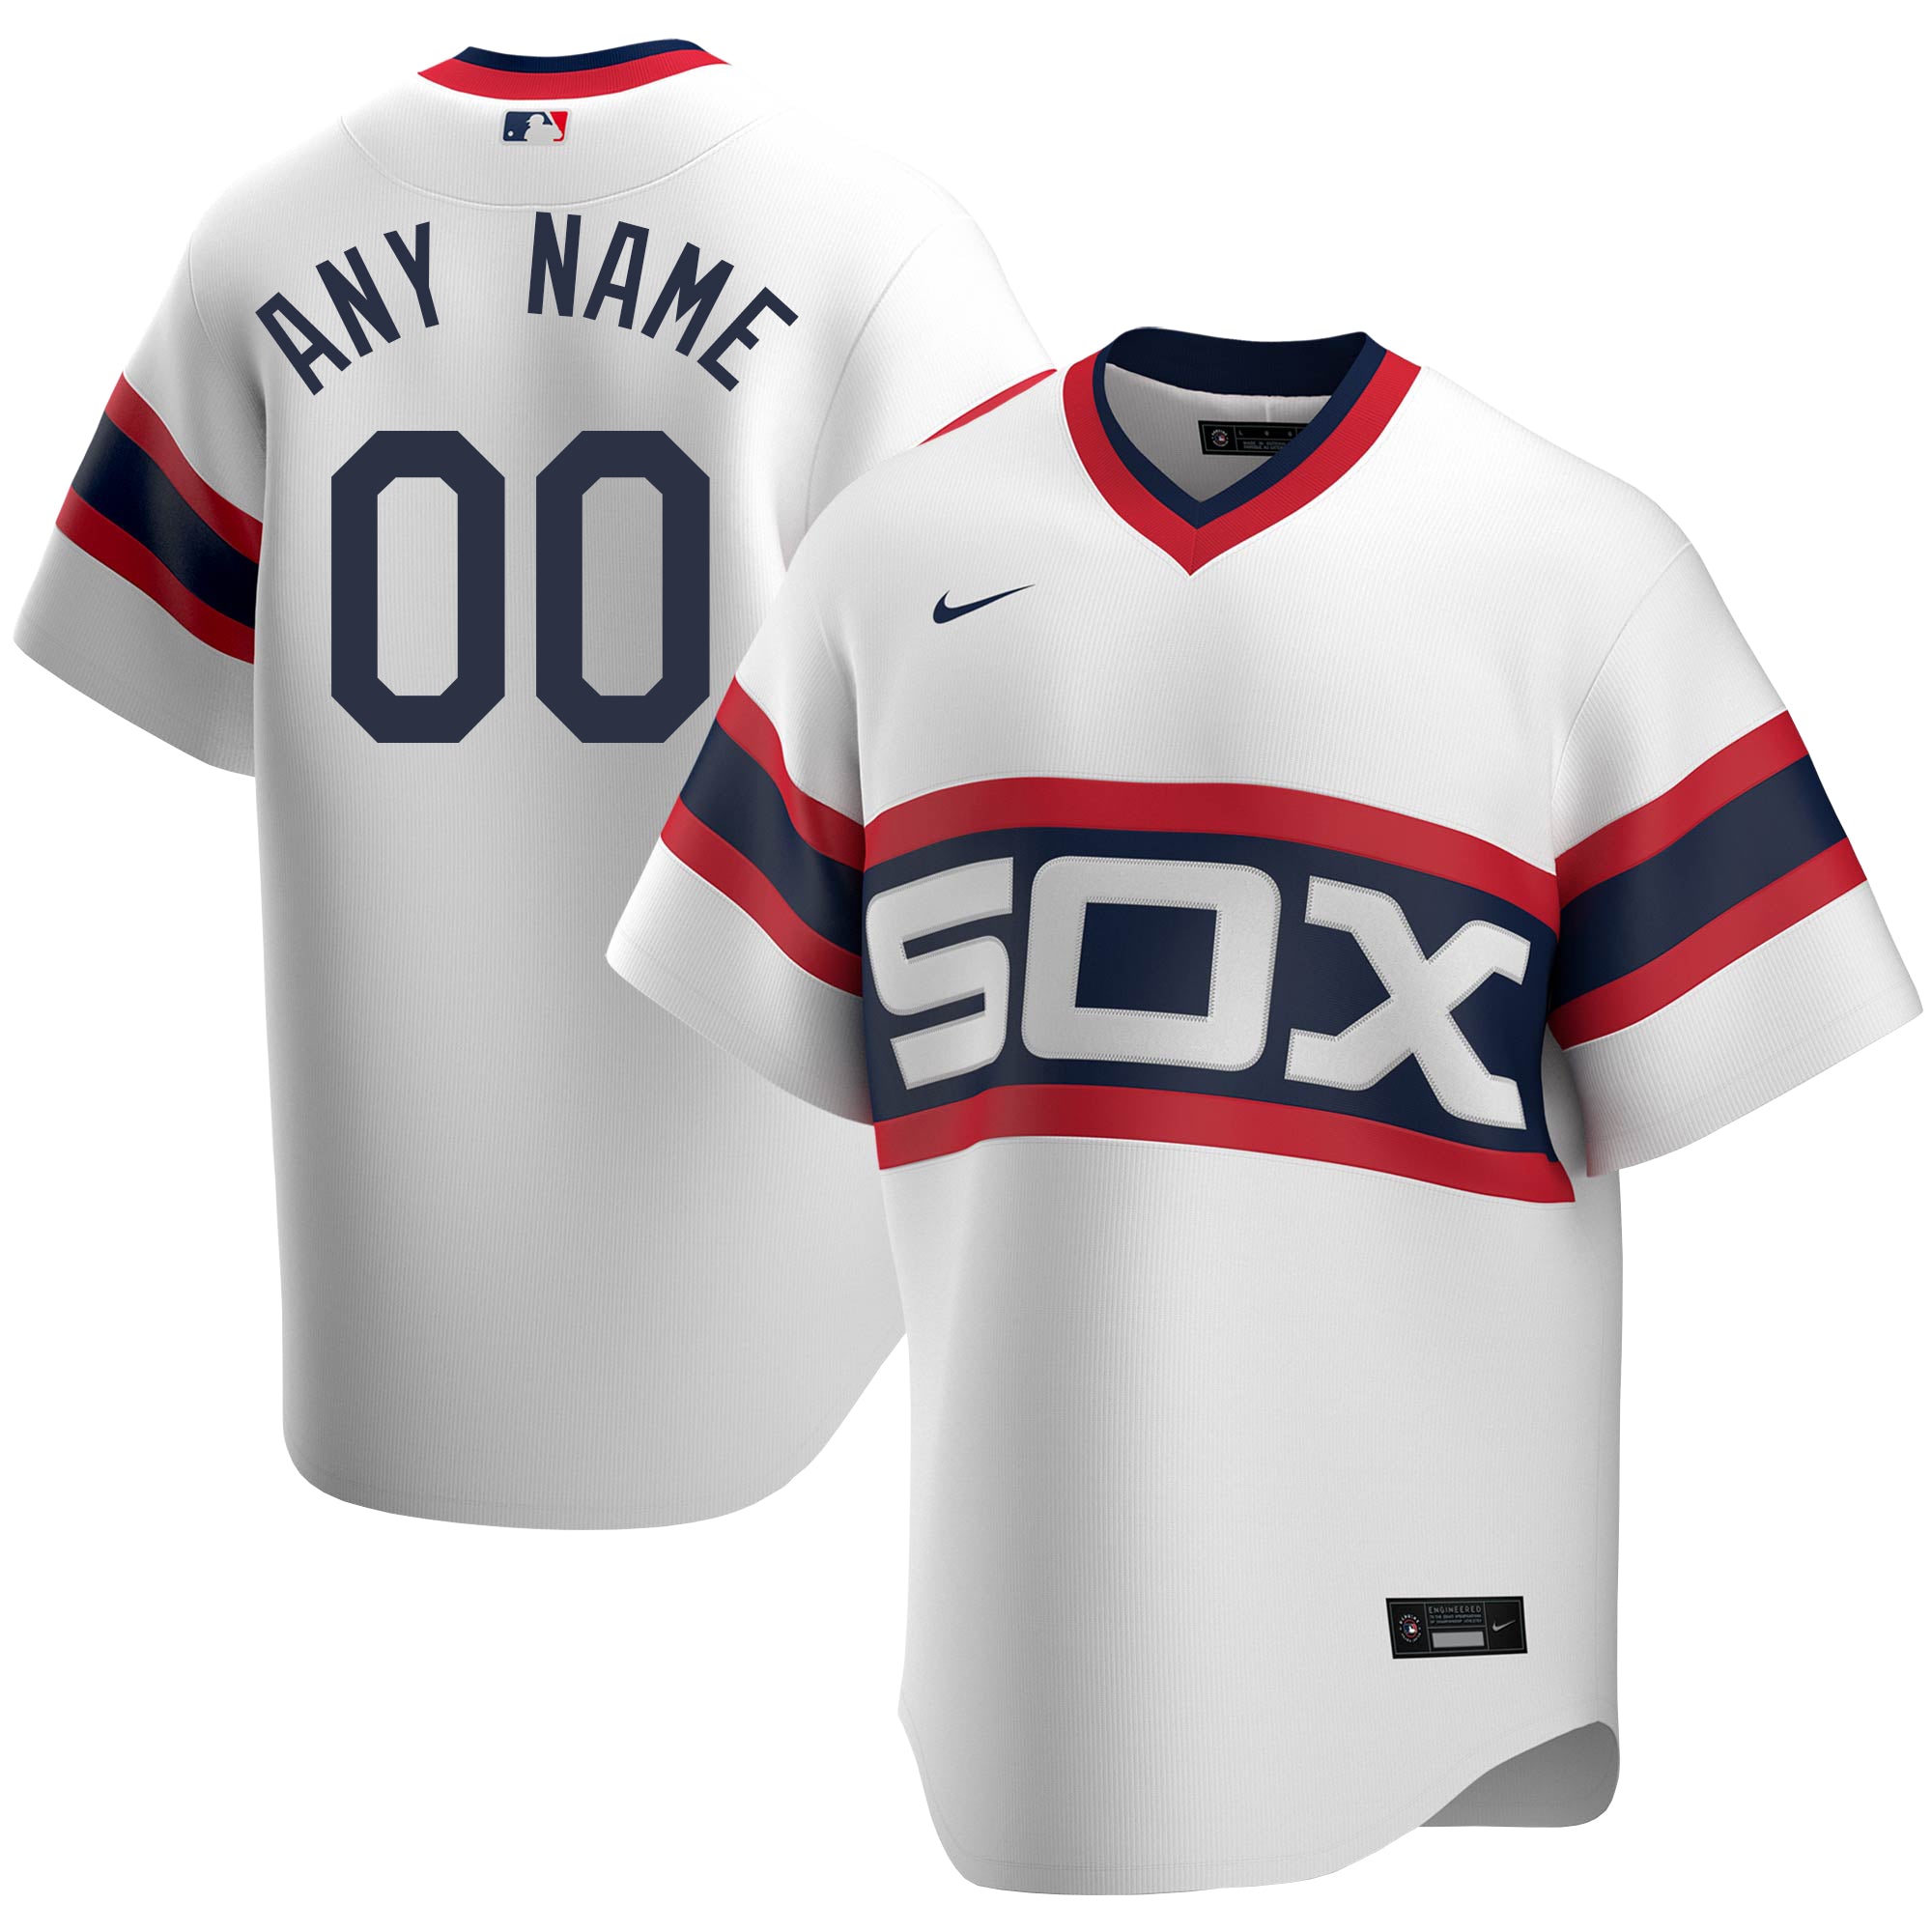 Chicago White Sox Nike Men's Grey Road Replica Jersey - Clark